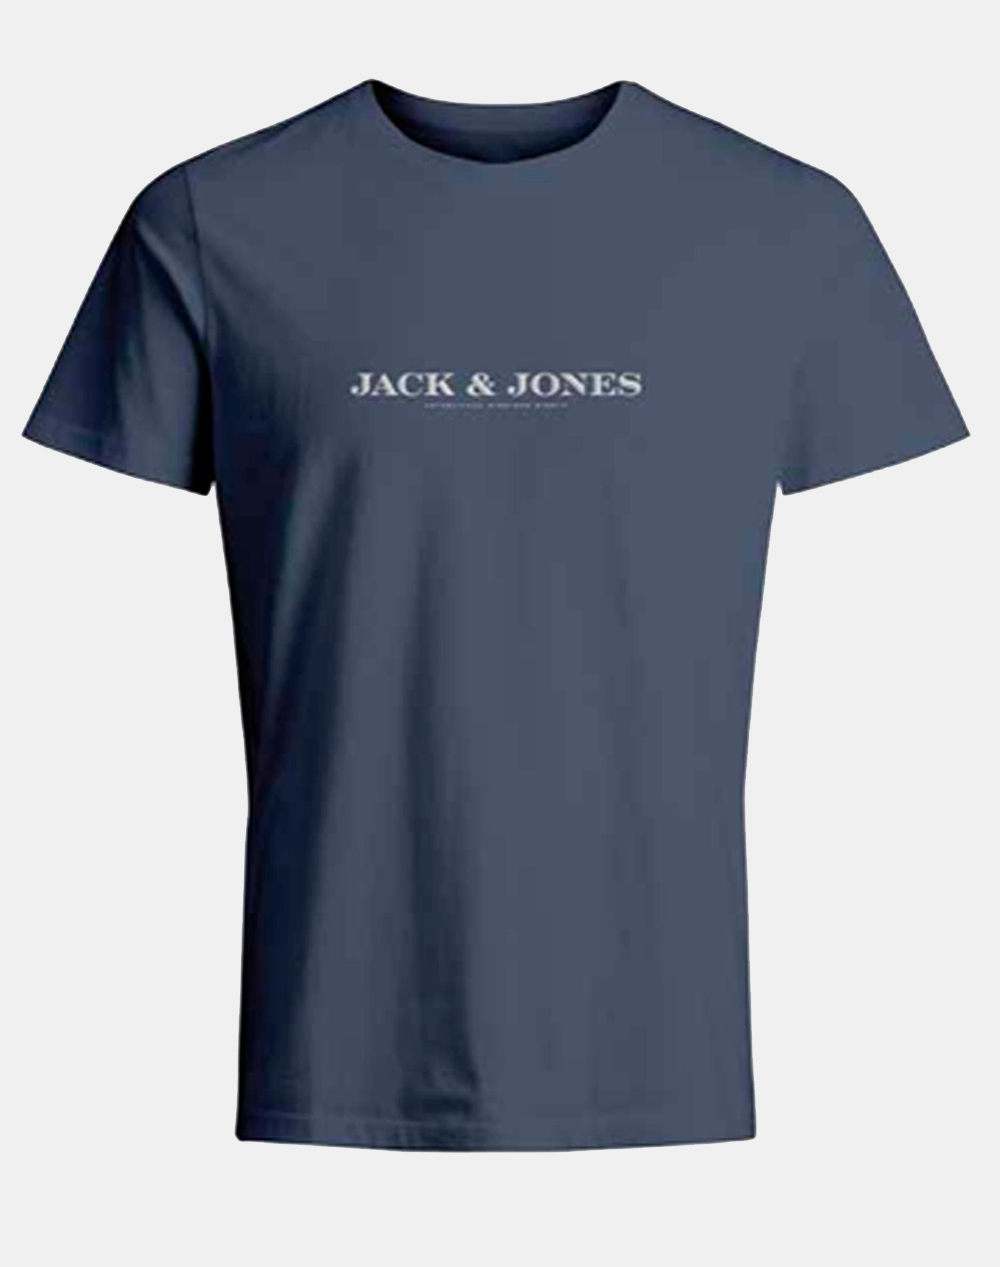 JACK&JONES JACK&JONES T-SHIRT 12247886-Bering Sea SteelBlue